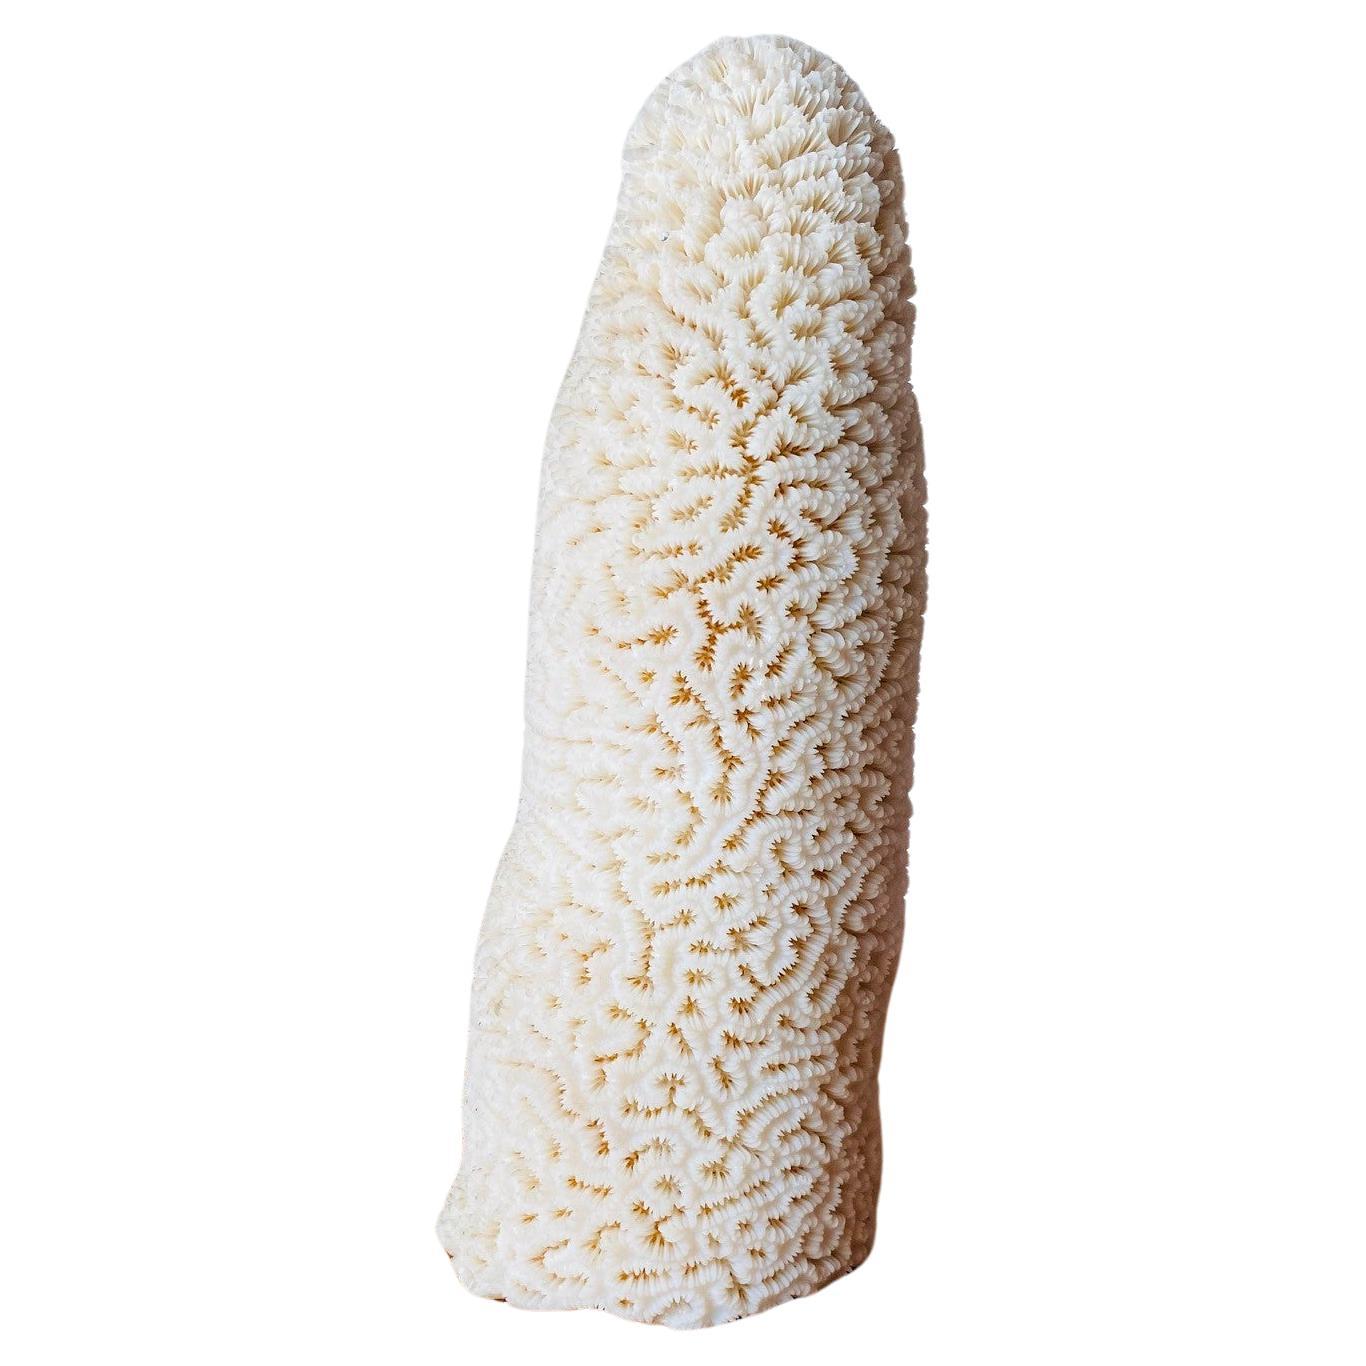 Sculptural Natural White Sea Coral Specimen